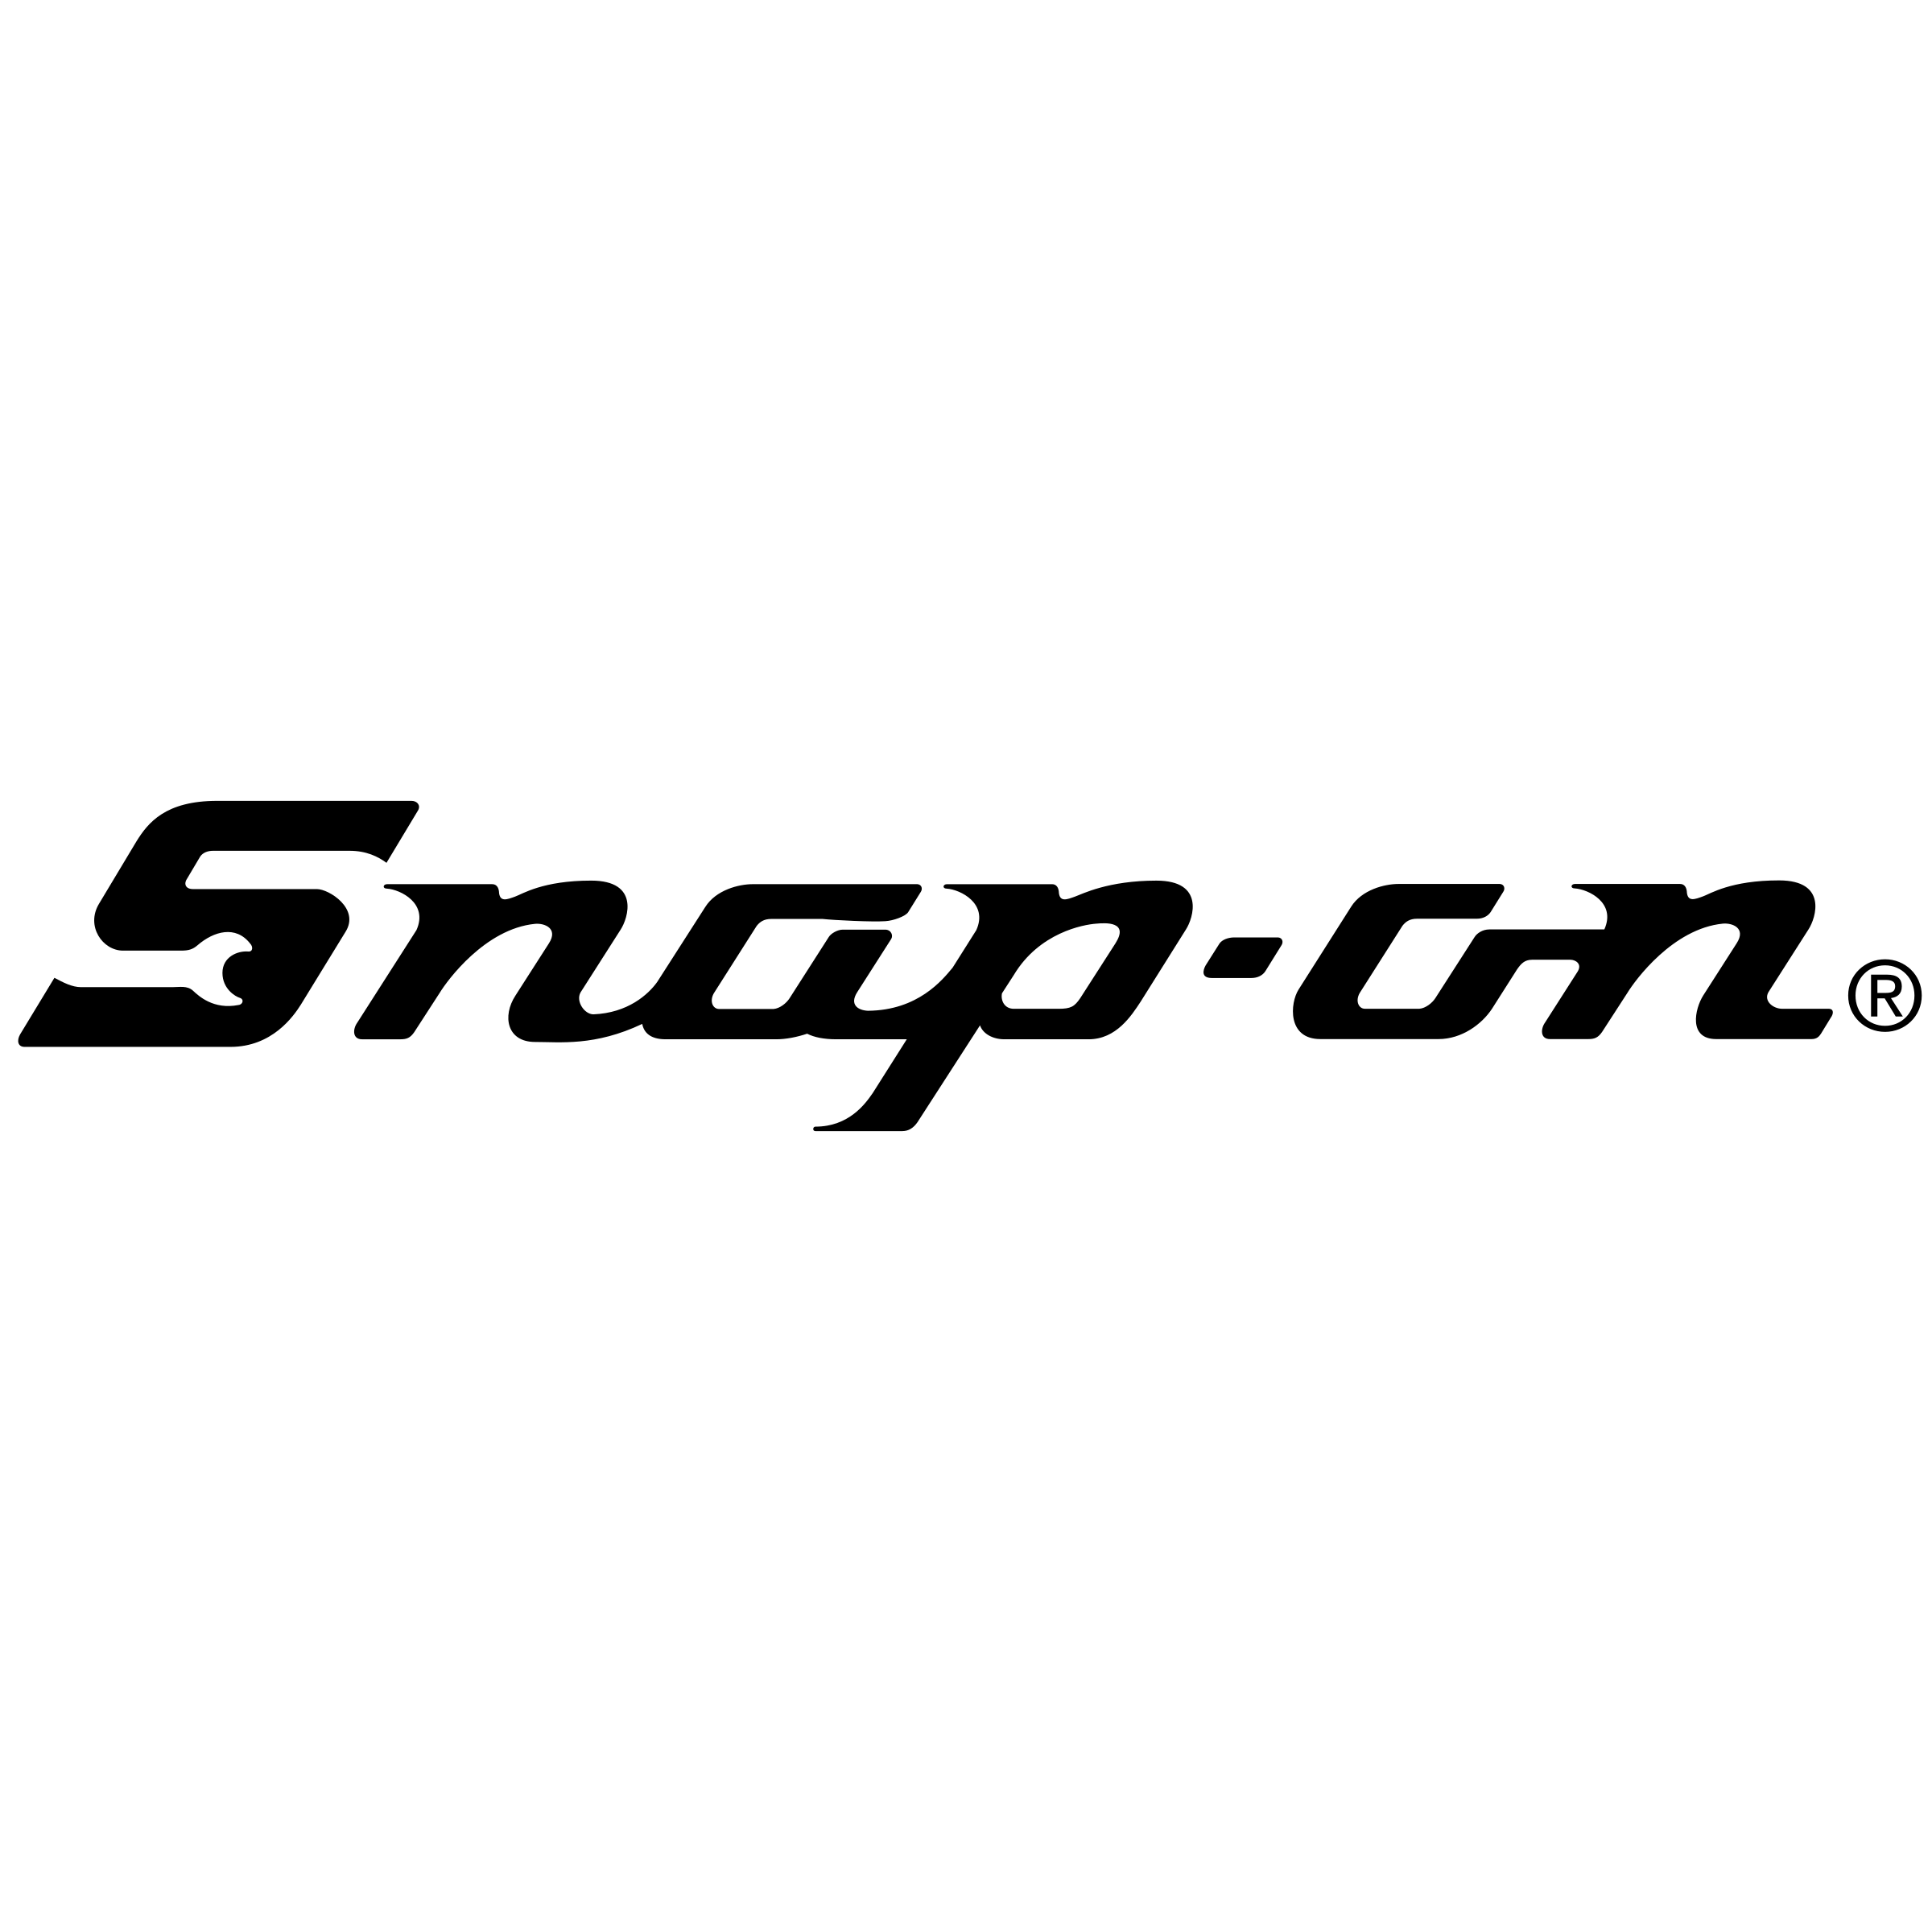 Snap-on Logo - Snap On Logo PNG Transparent & SVG Vector - Freebie Supply